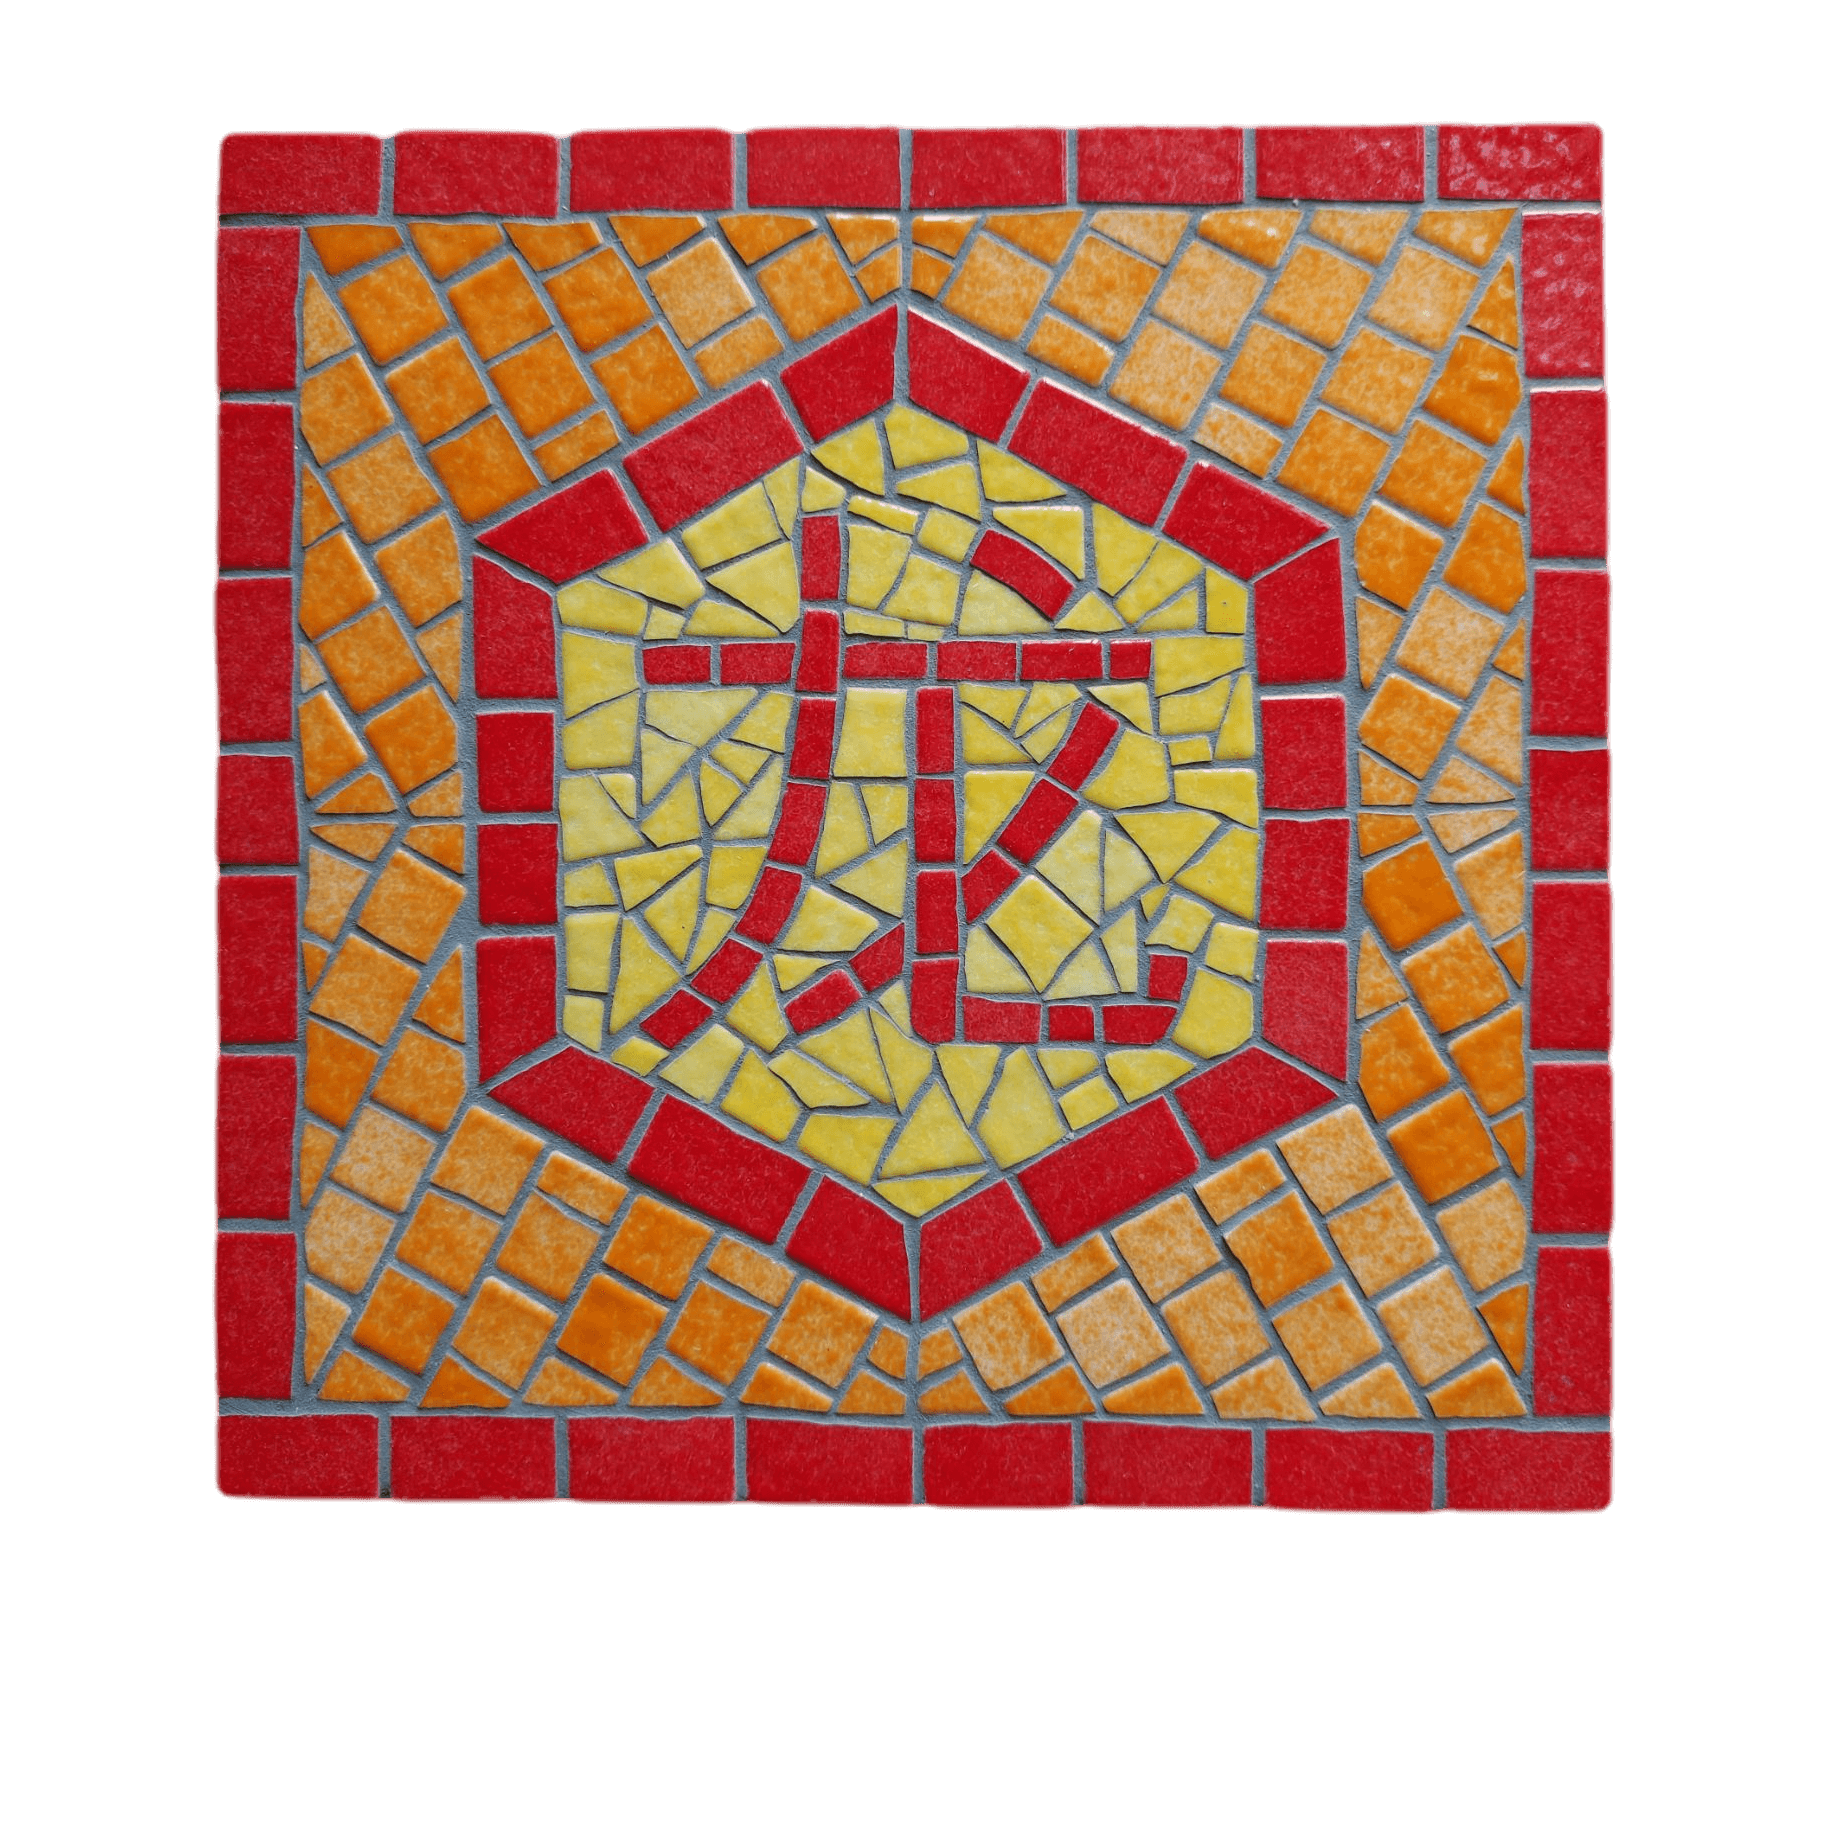 Artisanal Chinese zodiac mosaic, Dragon sign, red line